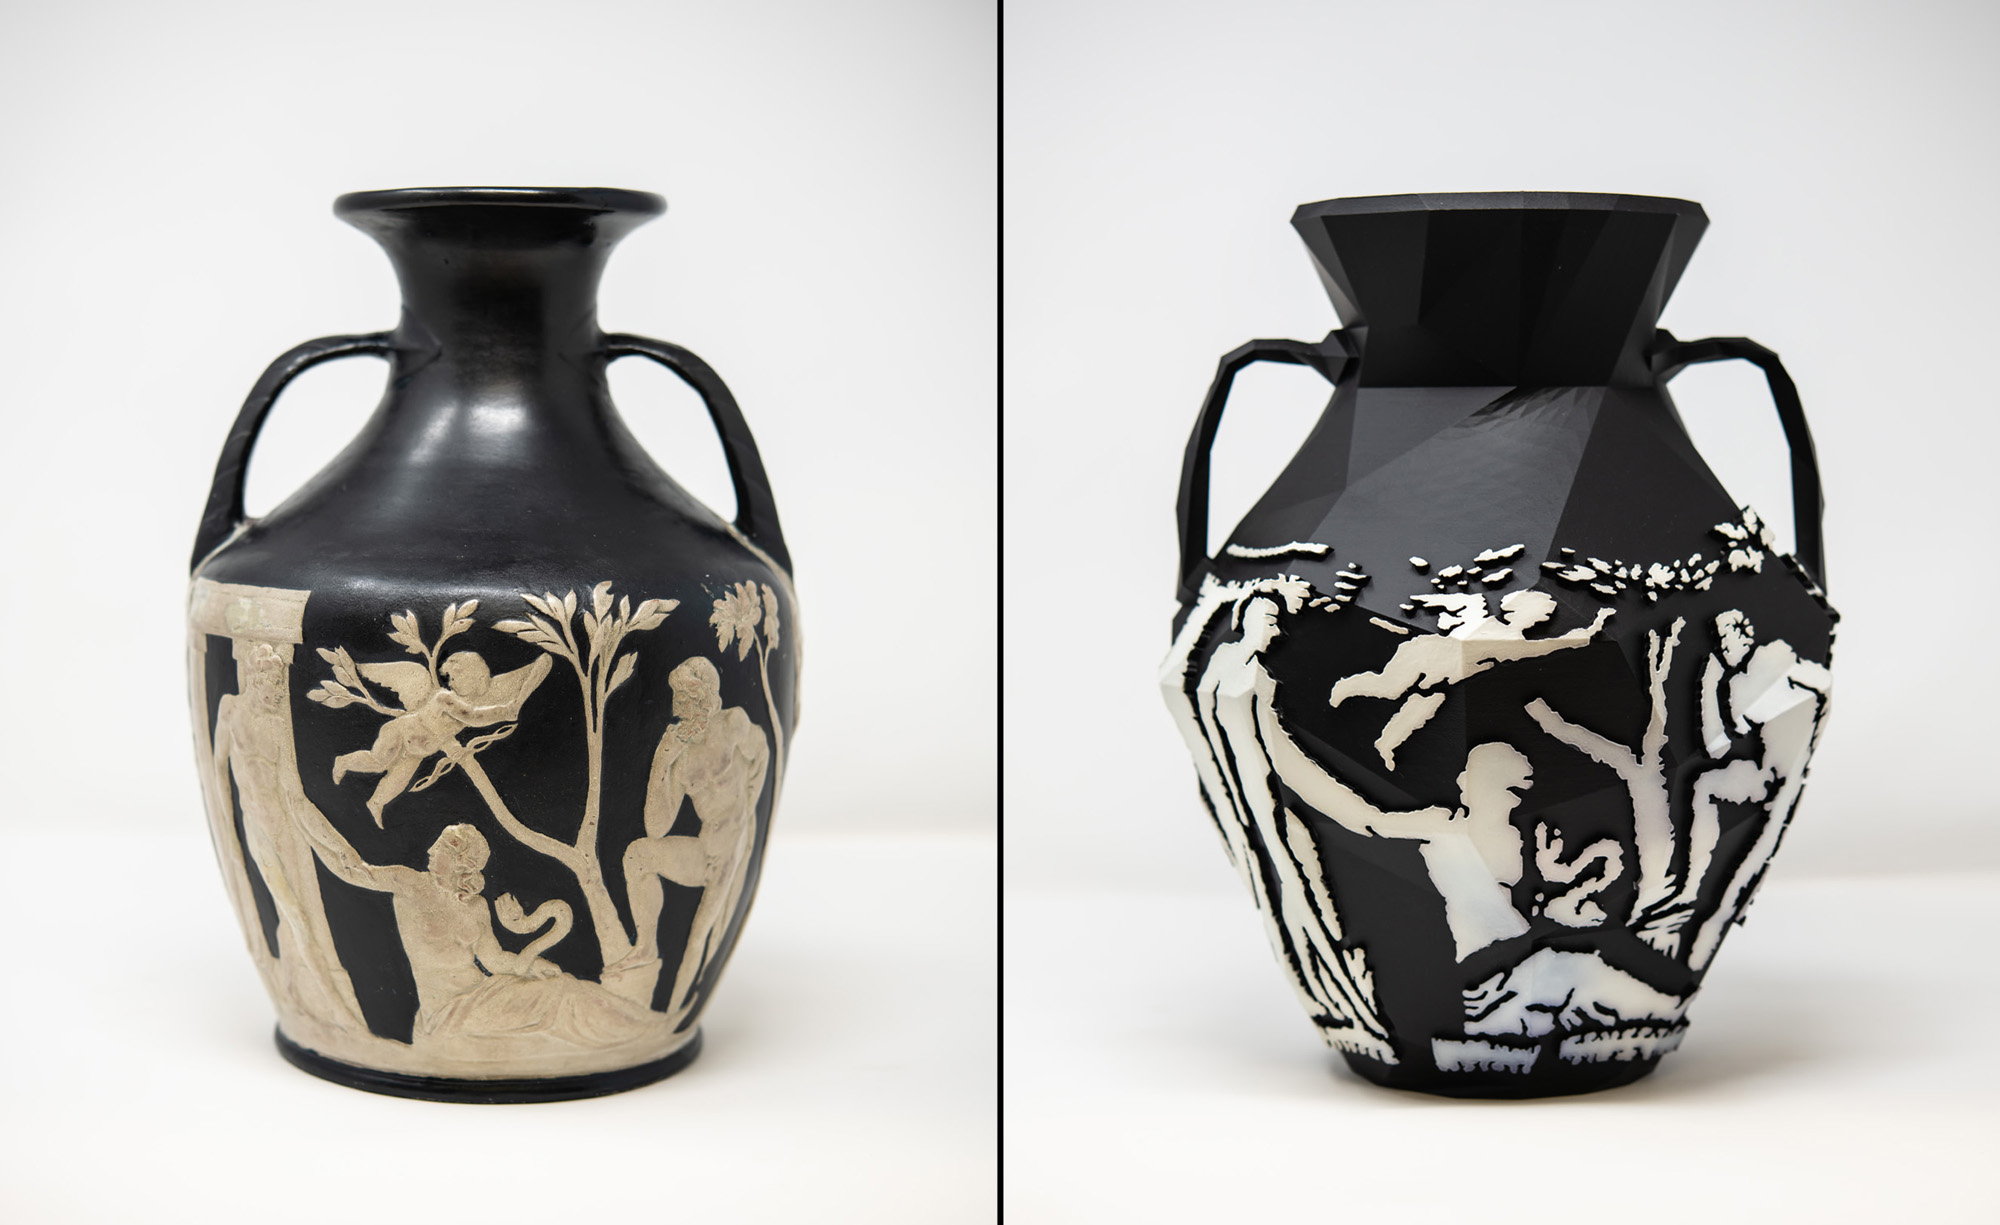 Leicester Museums Portland Vase (left) and Prtlnd Vase (right)